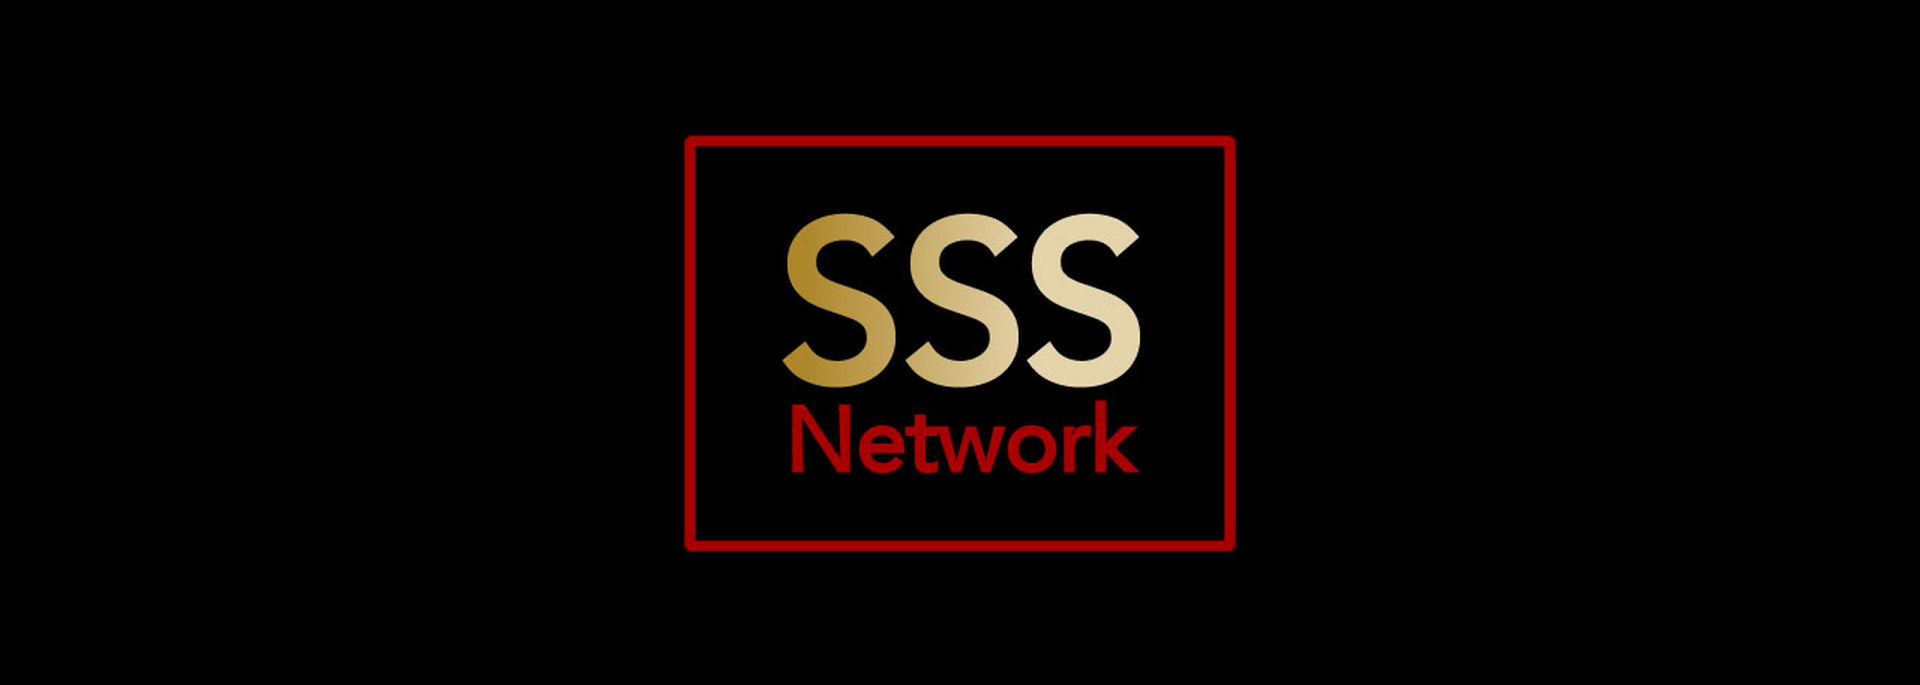 SSS Network